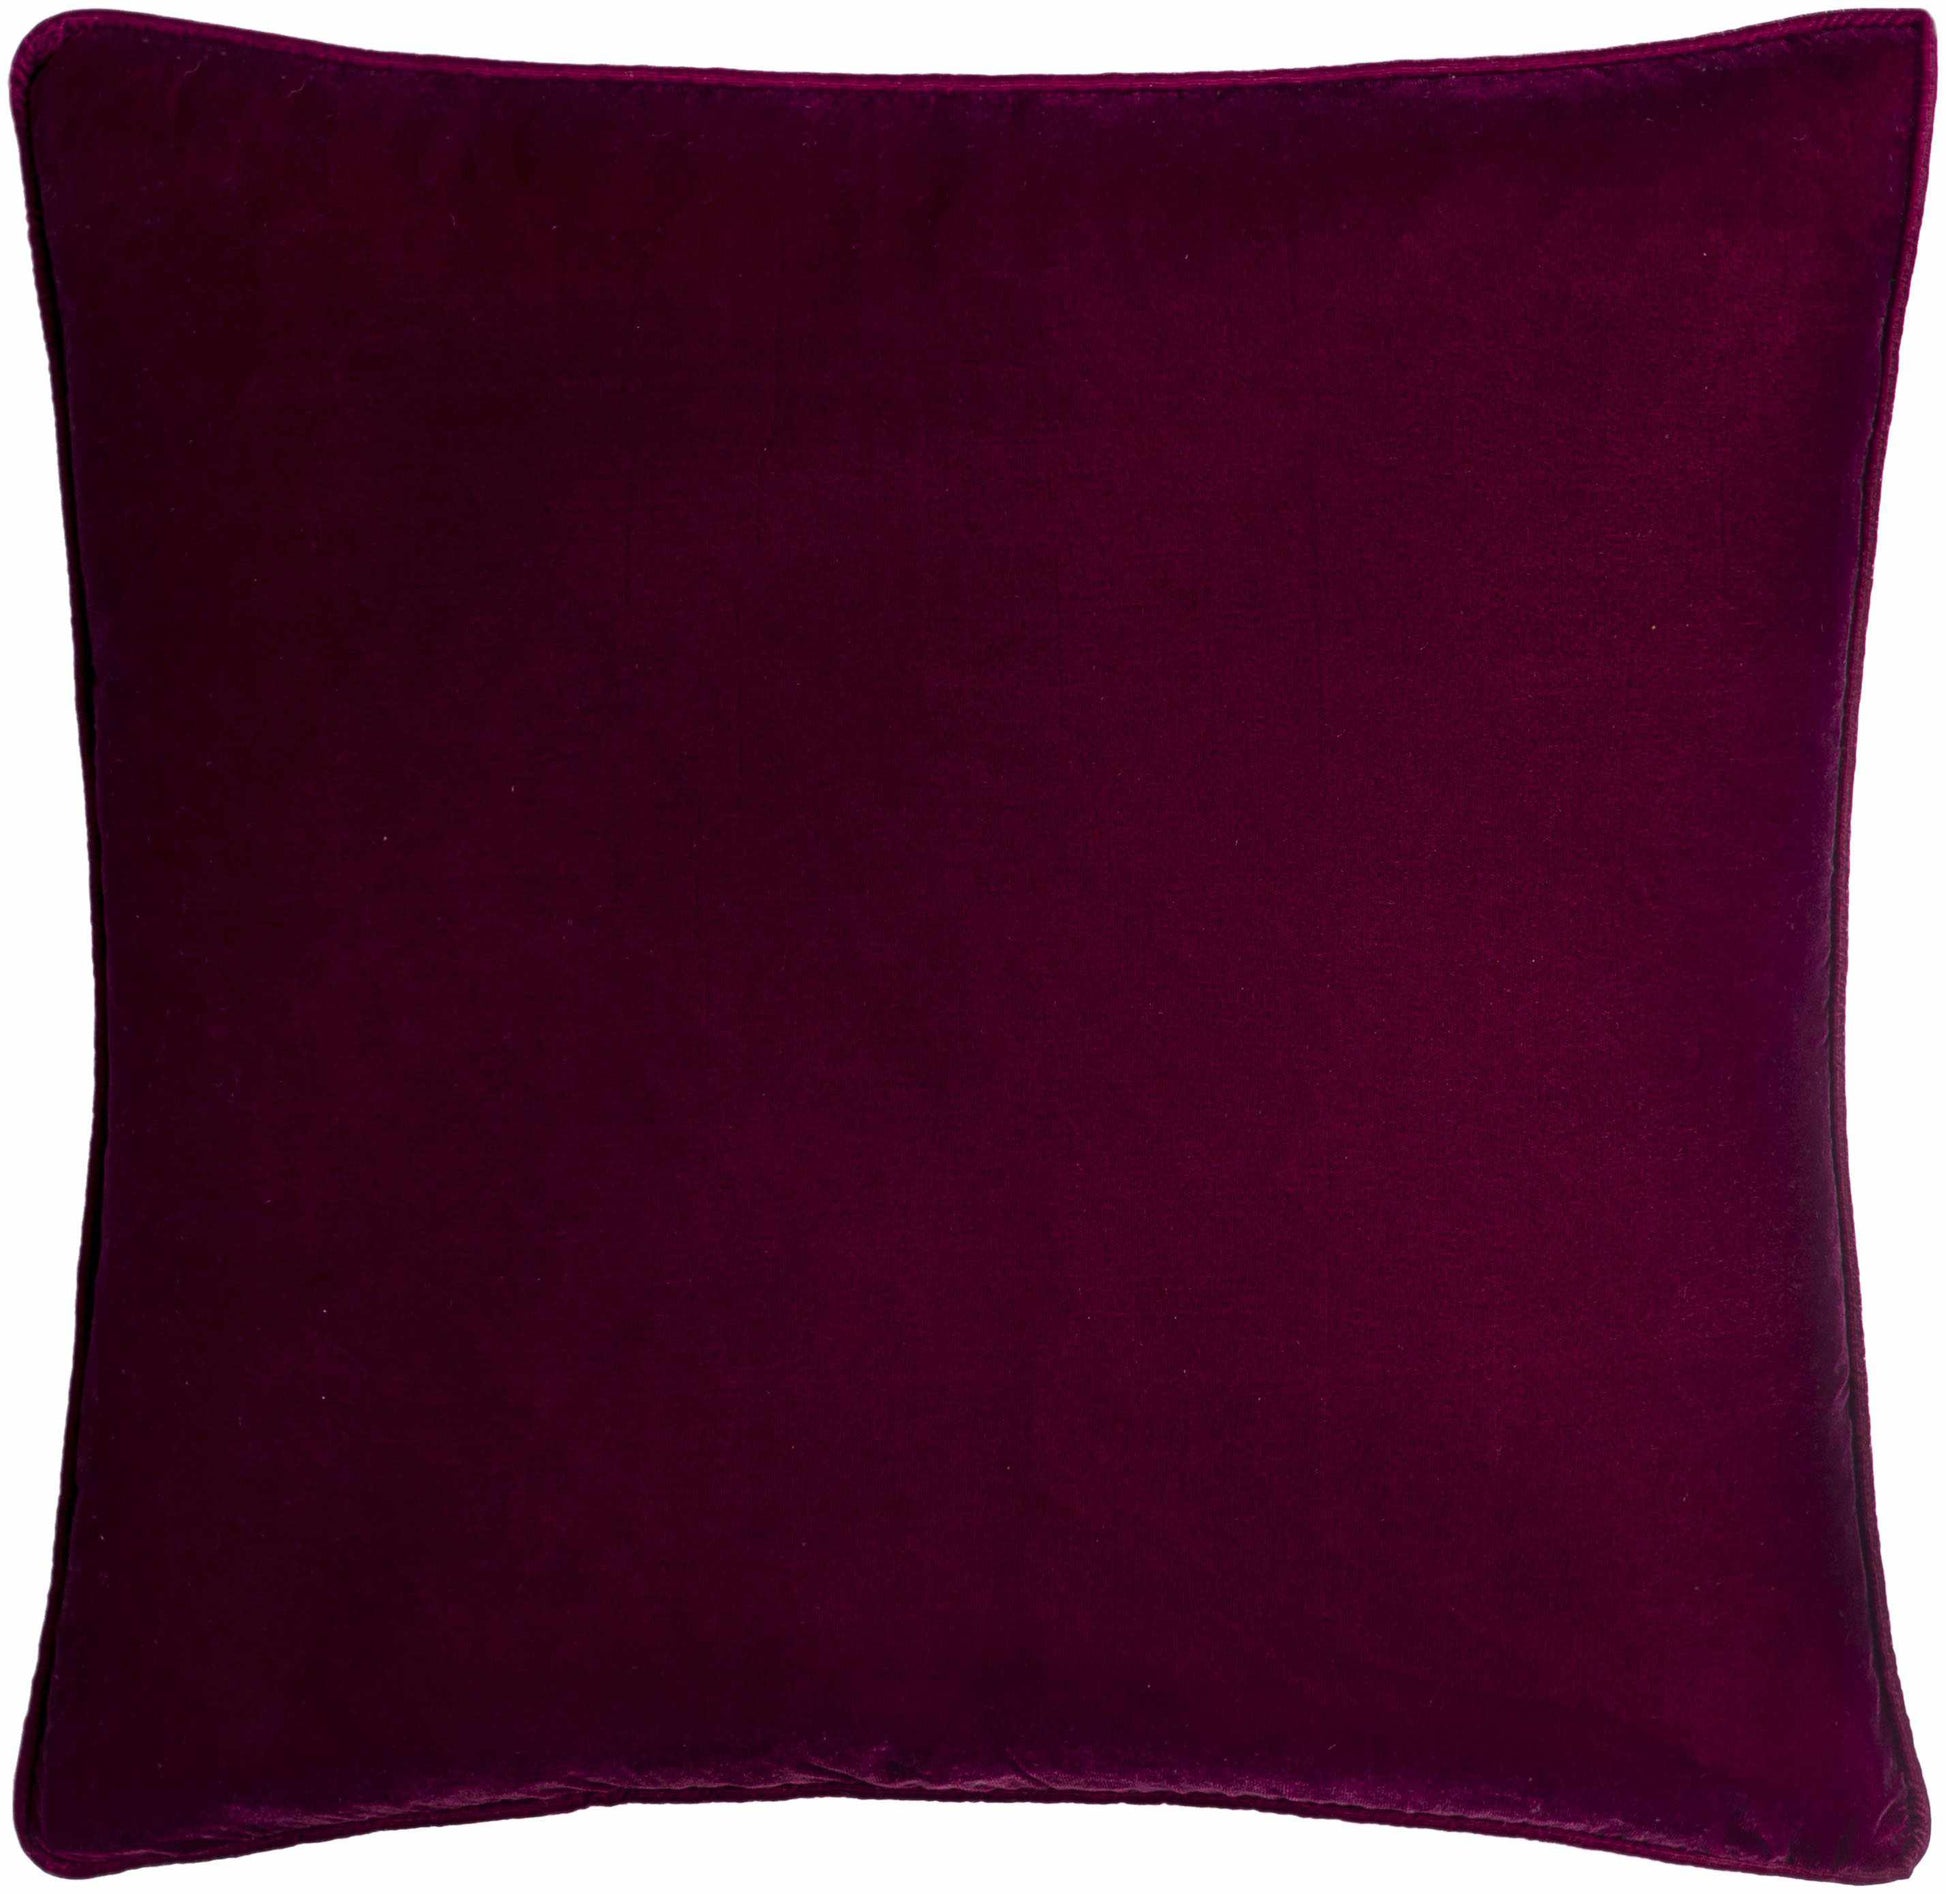 Perg Dark Purple Pillow Cover